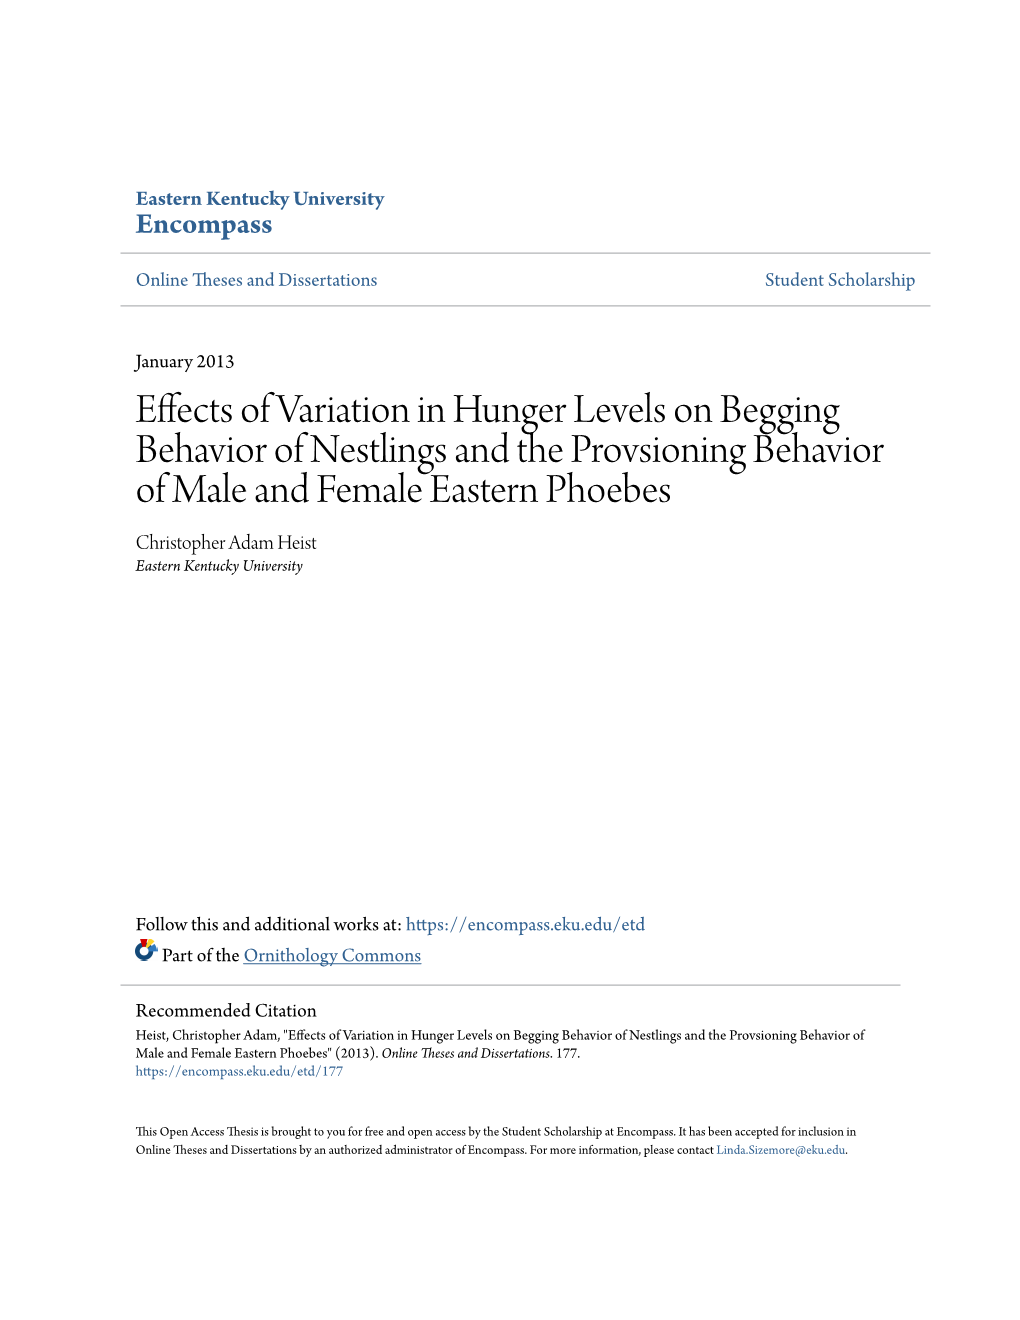 Effects of Variation in Hunger Levels on Begging Behavior of Nestlings